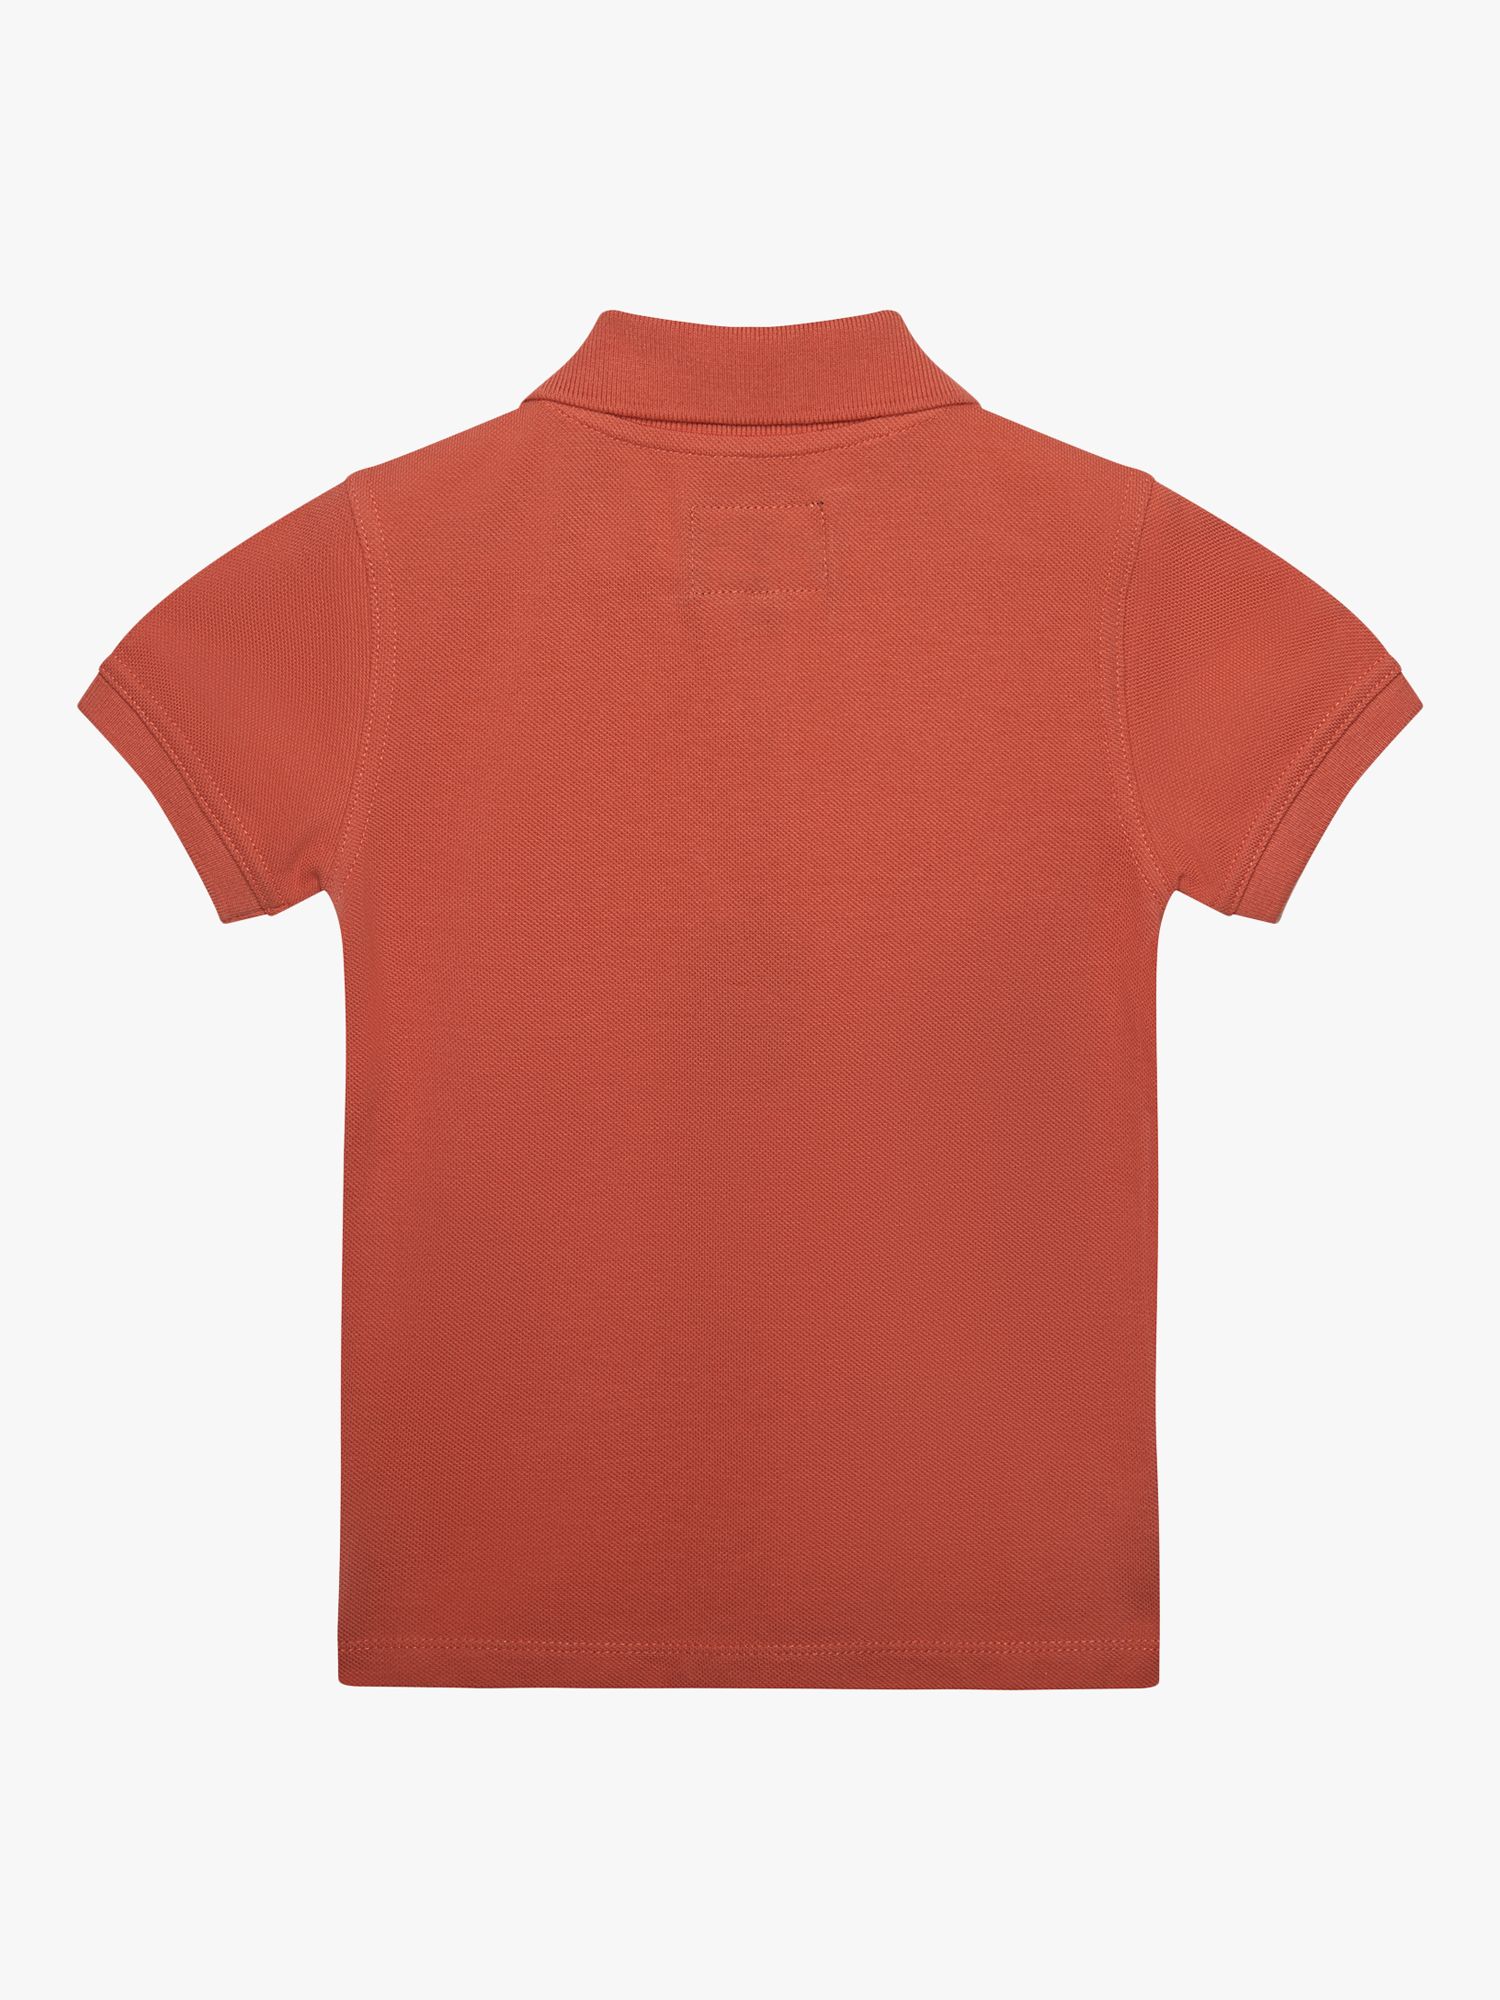 Trotters Kids' Harry Pique Polo Shirt, Orange, 12 months